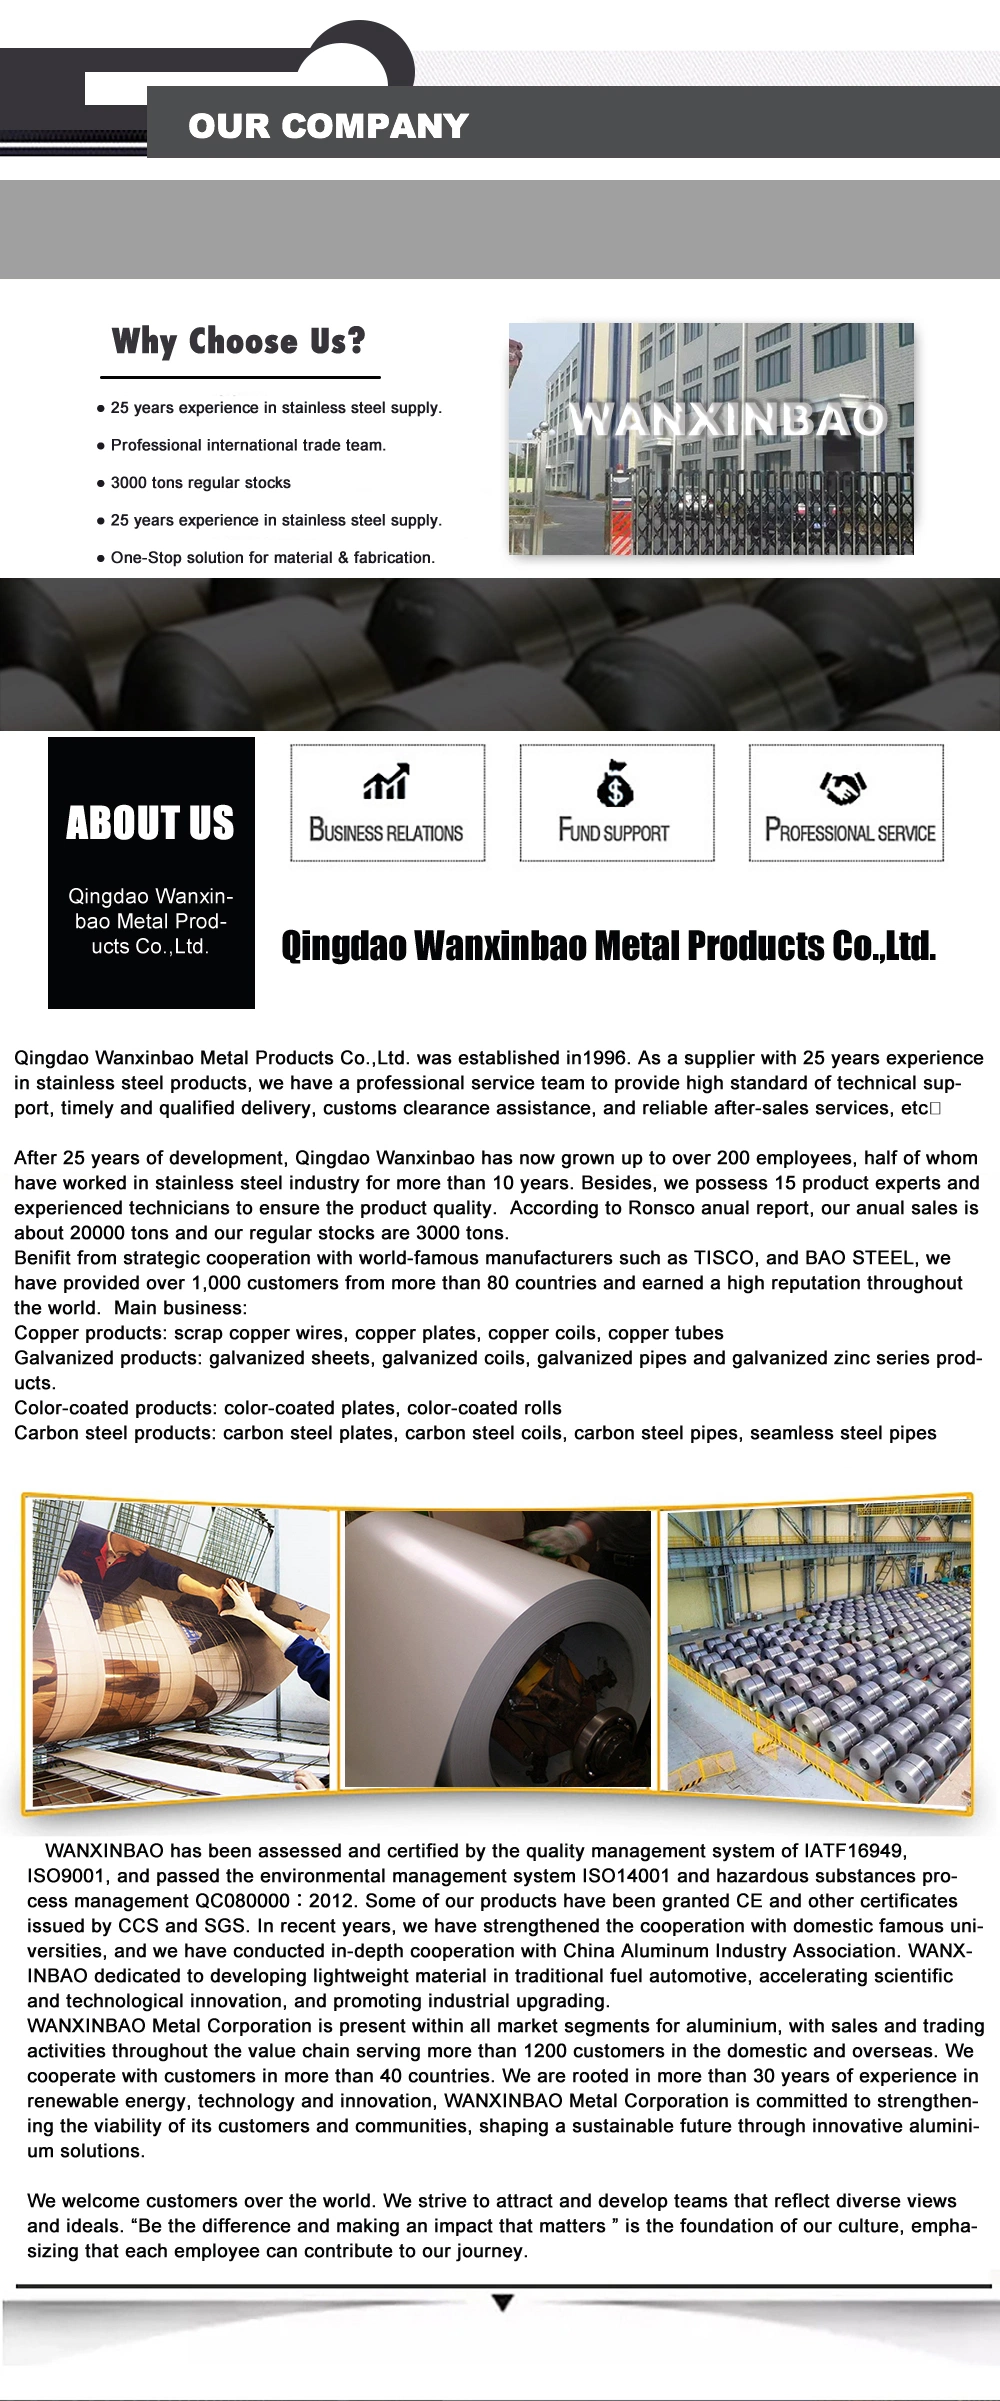 ASTM 2b Hl 8K 4*8 AISI 3161 Stainless Steel Sheet 430 201 202 321 316 304 Hard Stainless Steel Sheet